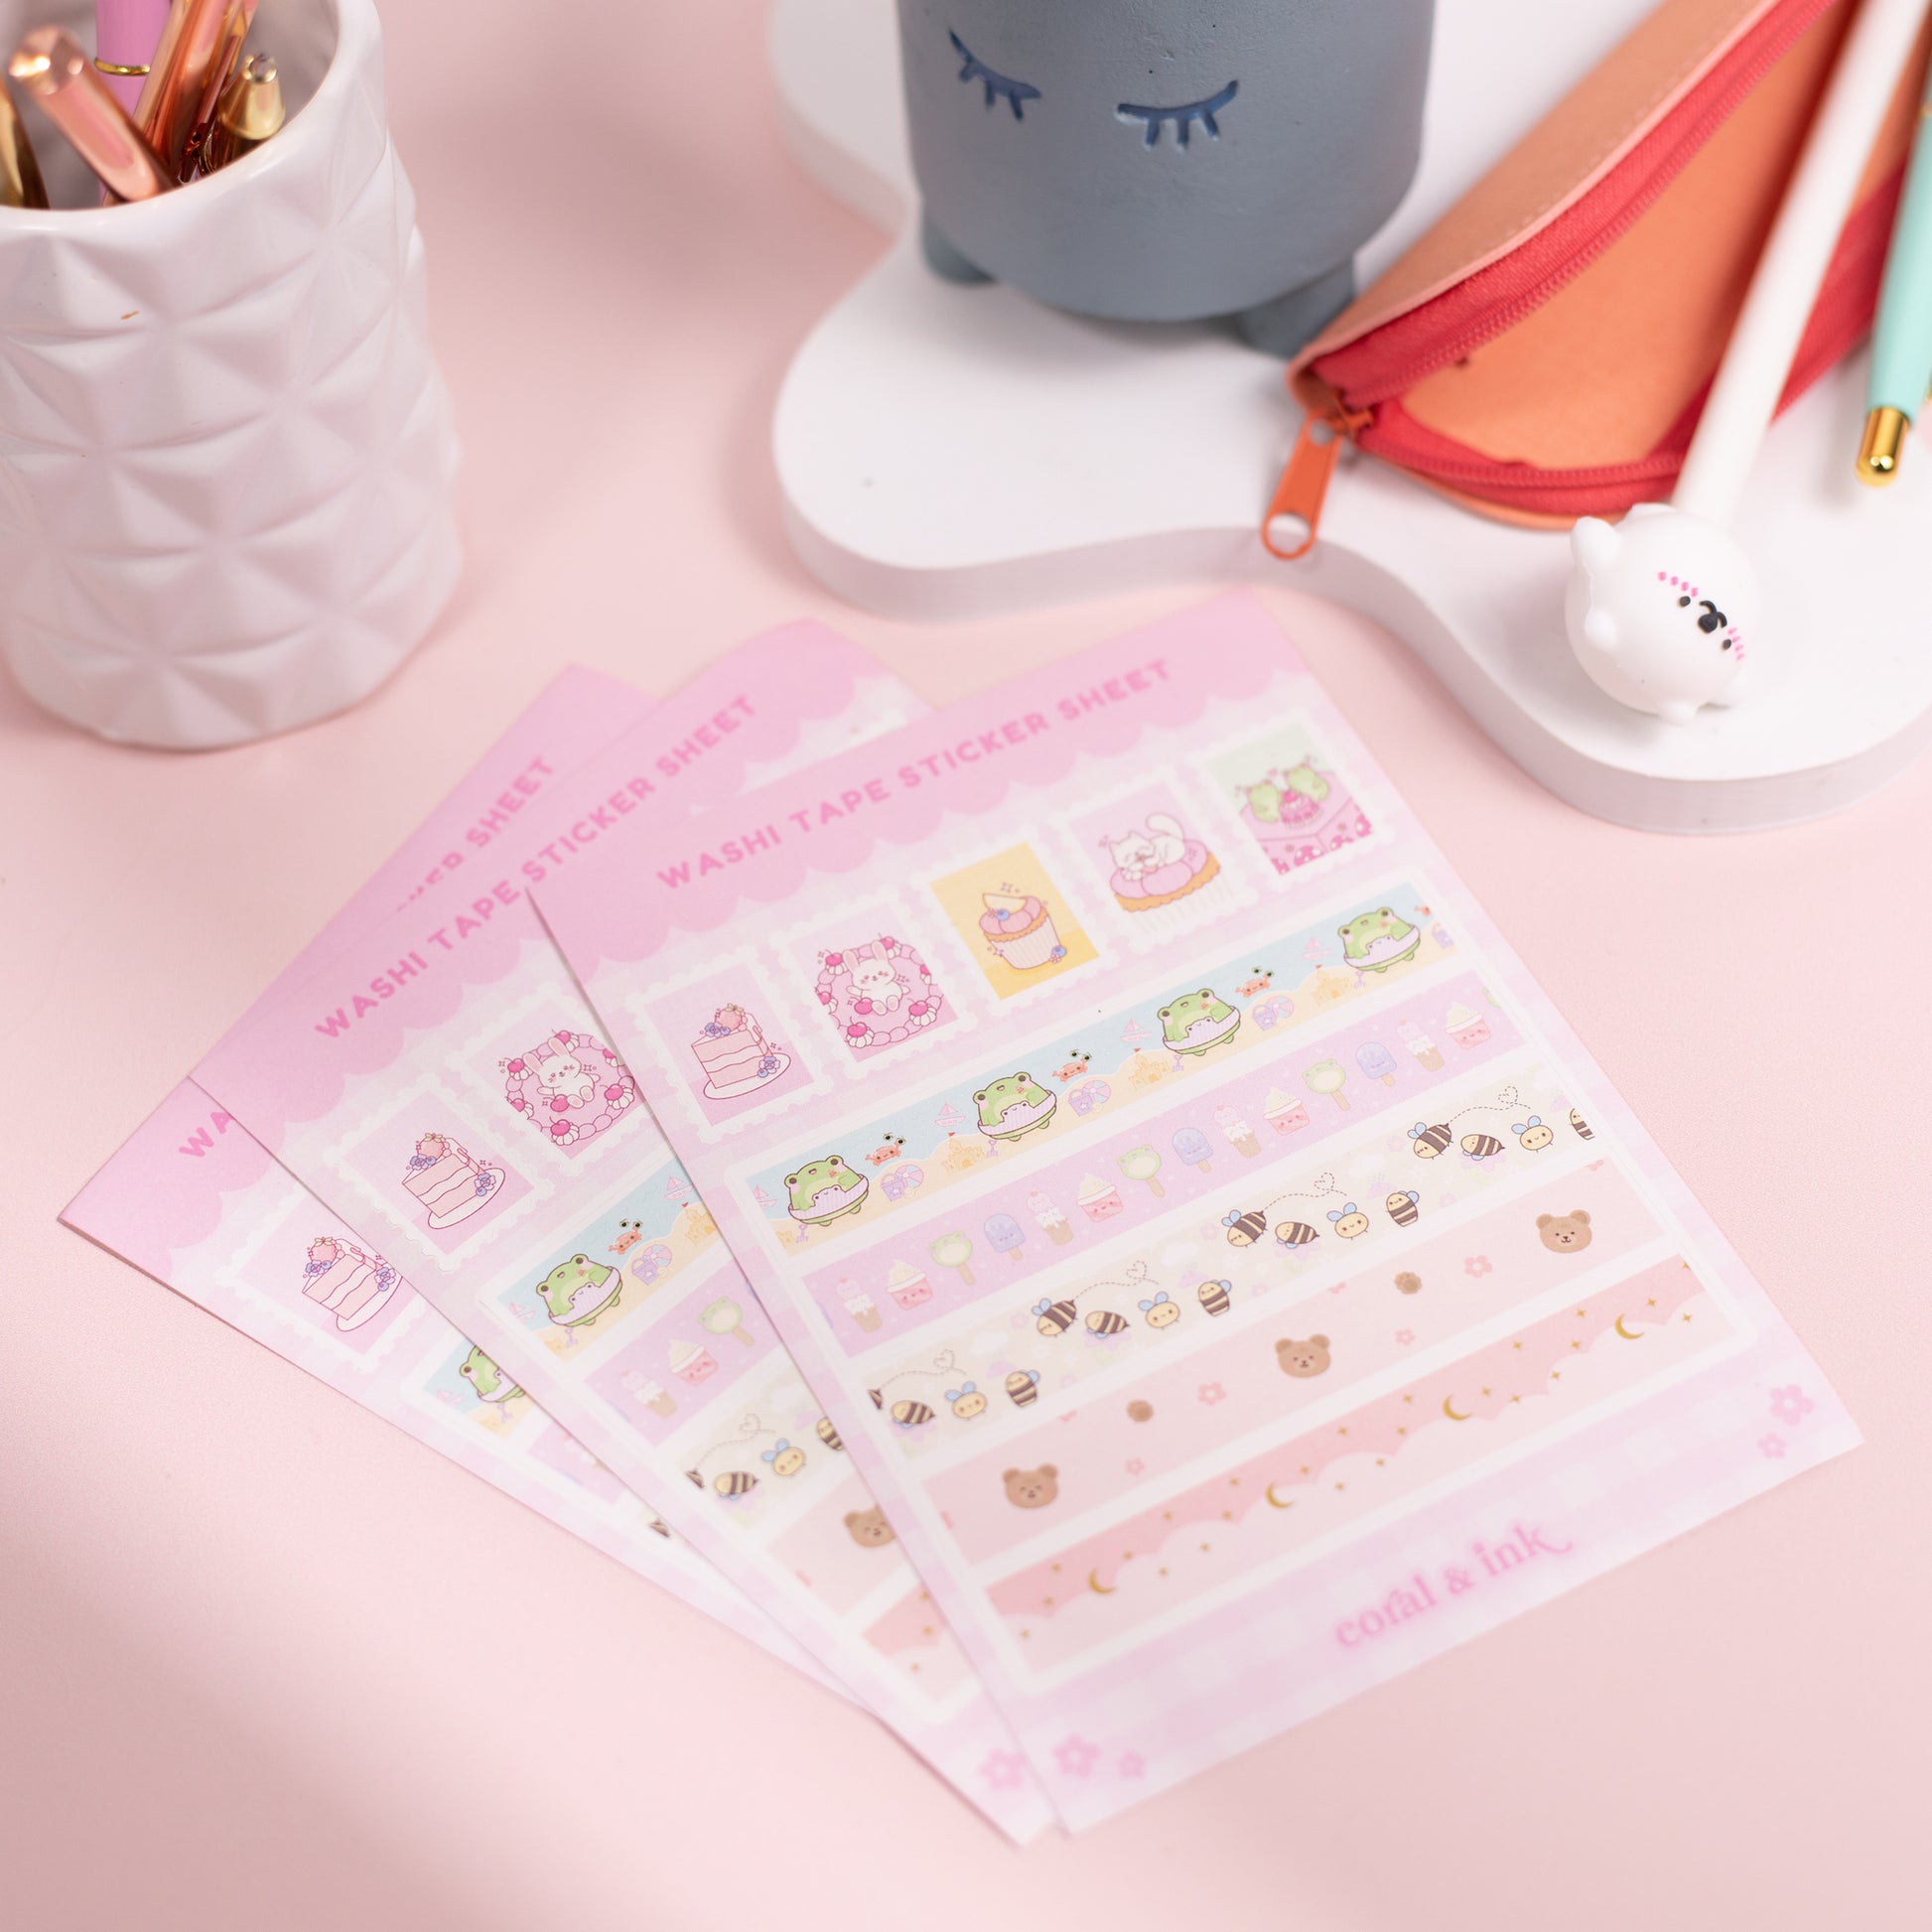 Washi Tape Sample Sticker Sheet